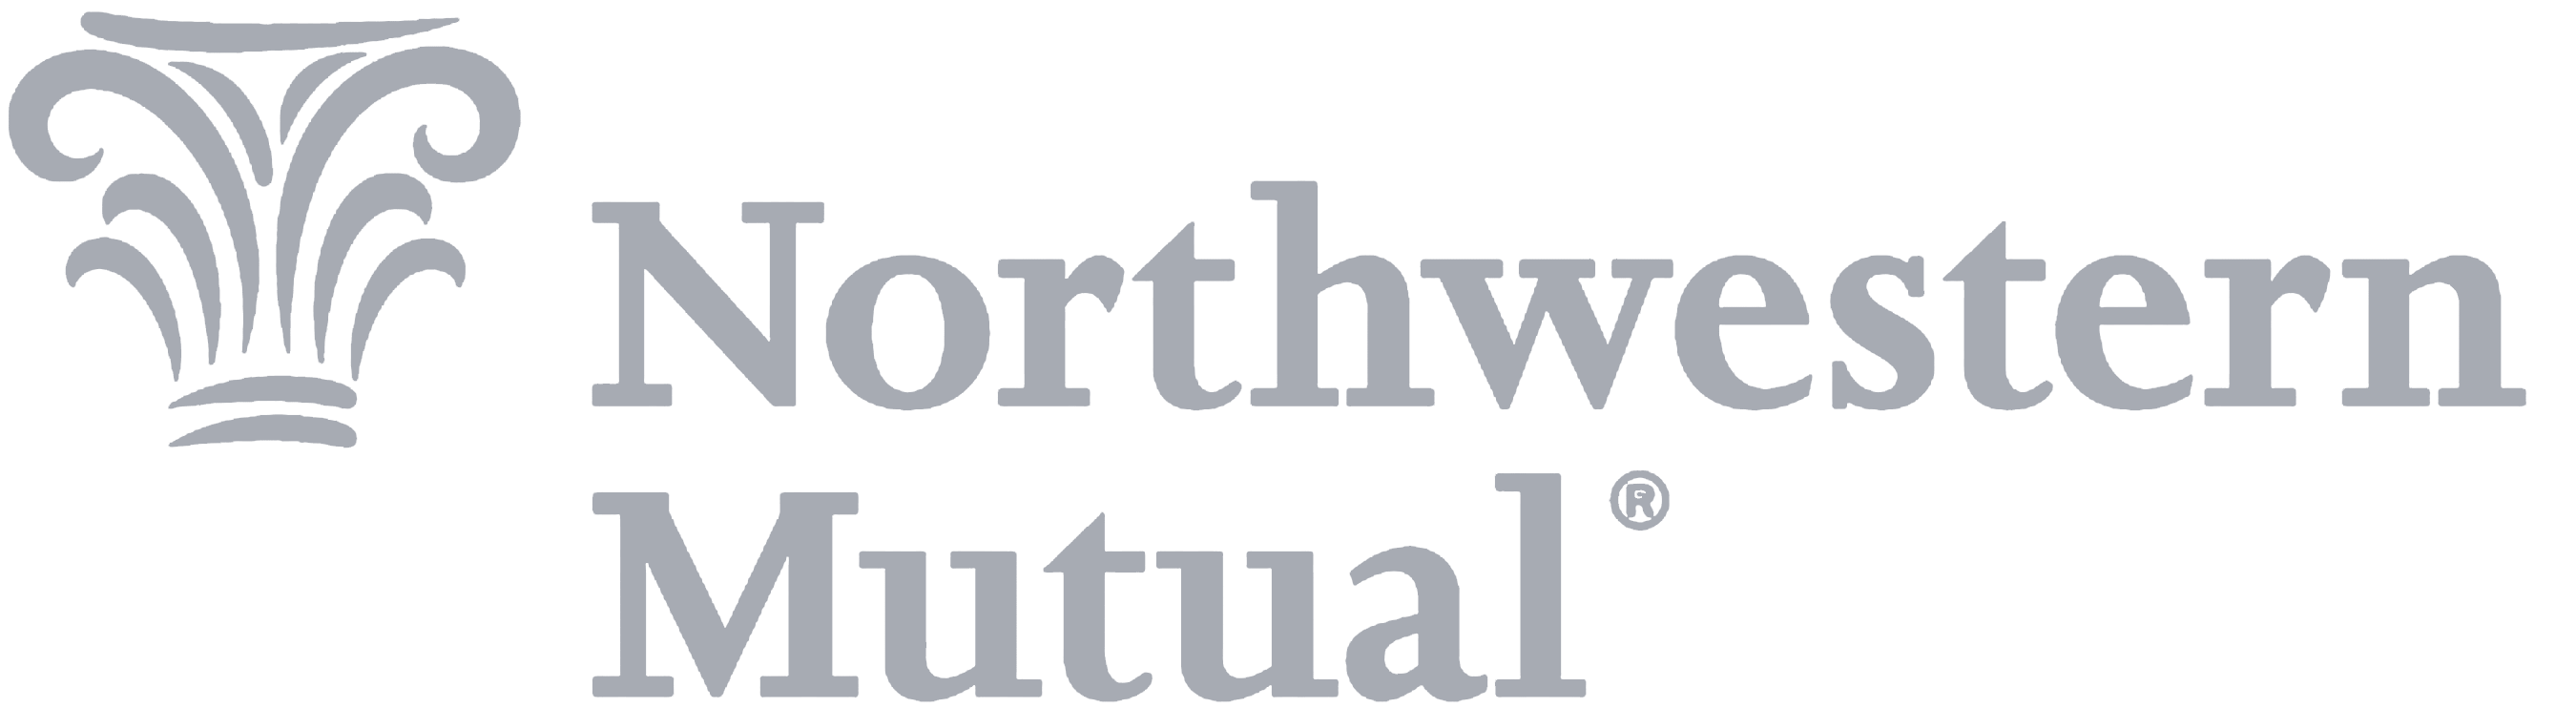 Northwestern Mutual Logo - Cool Gray